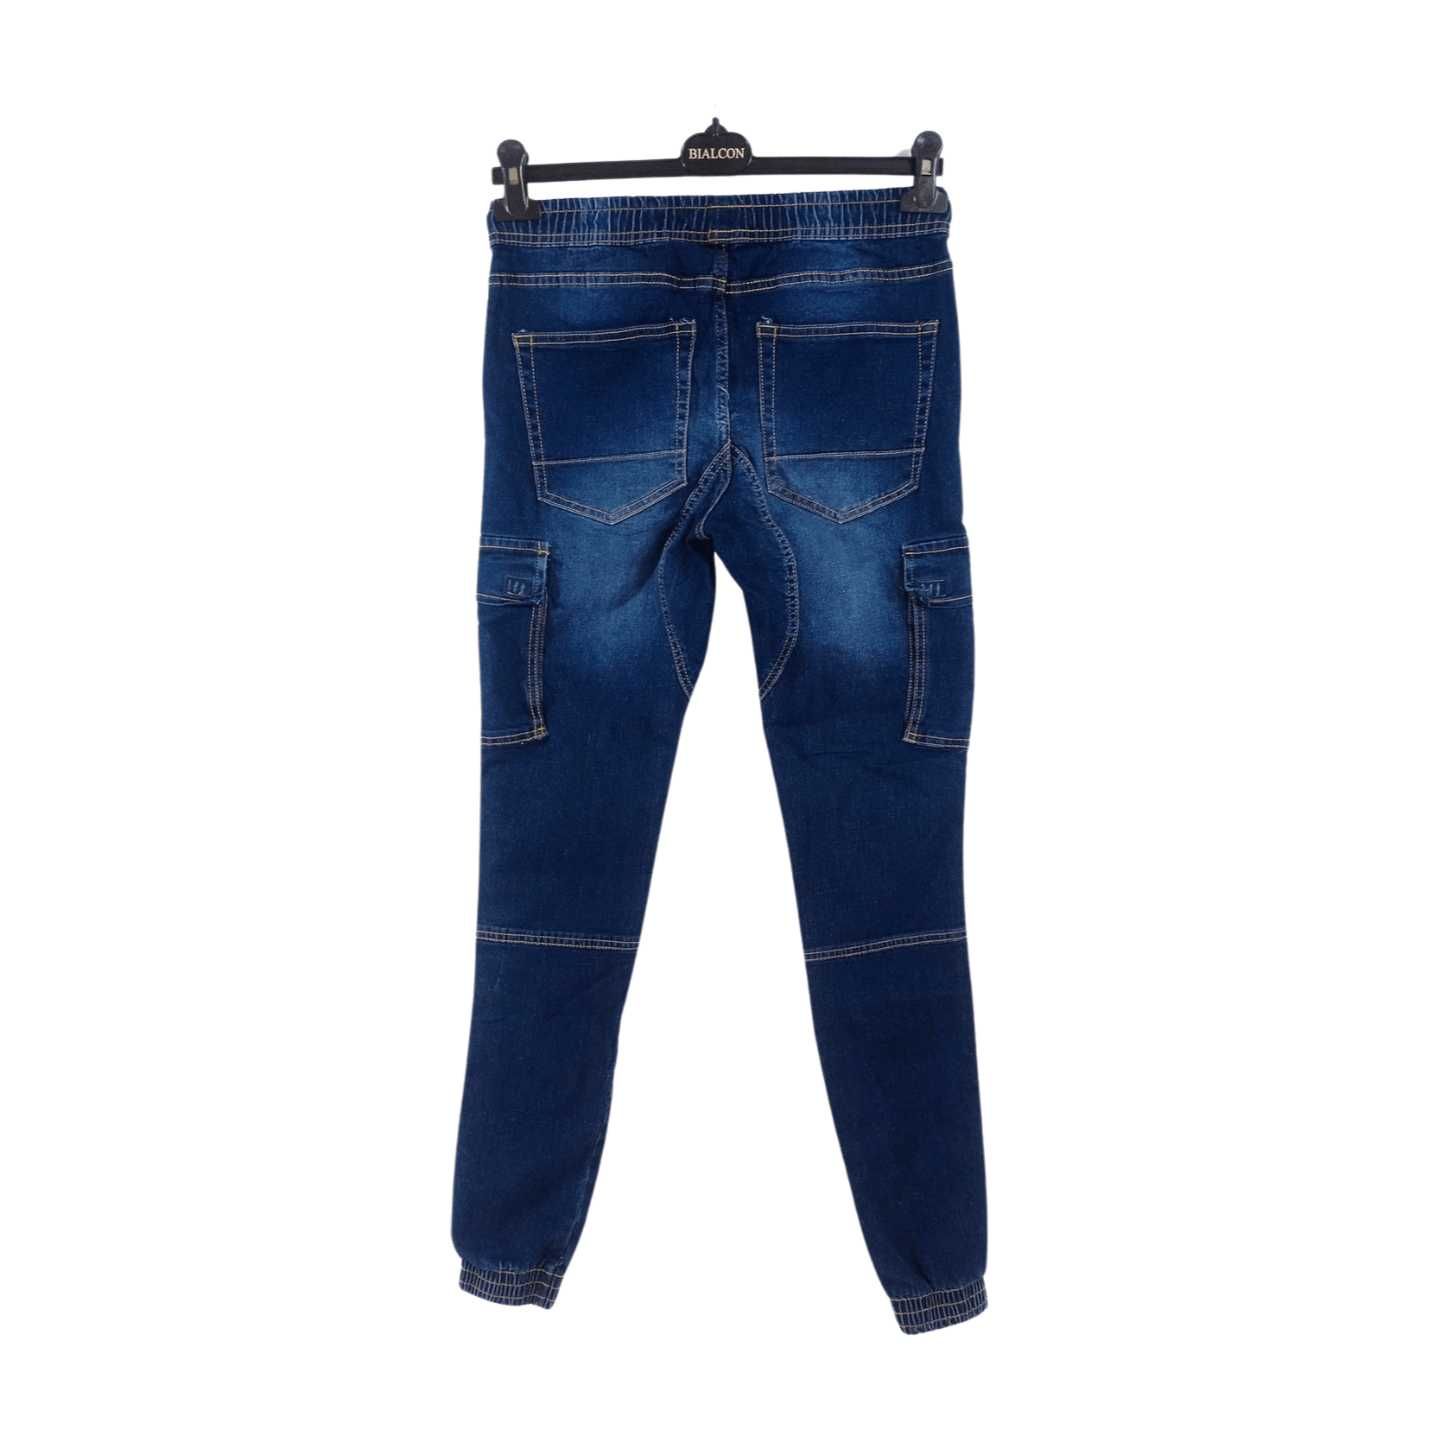 Spodnie jeansy męskie joggery rozm. 30 dark blue